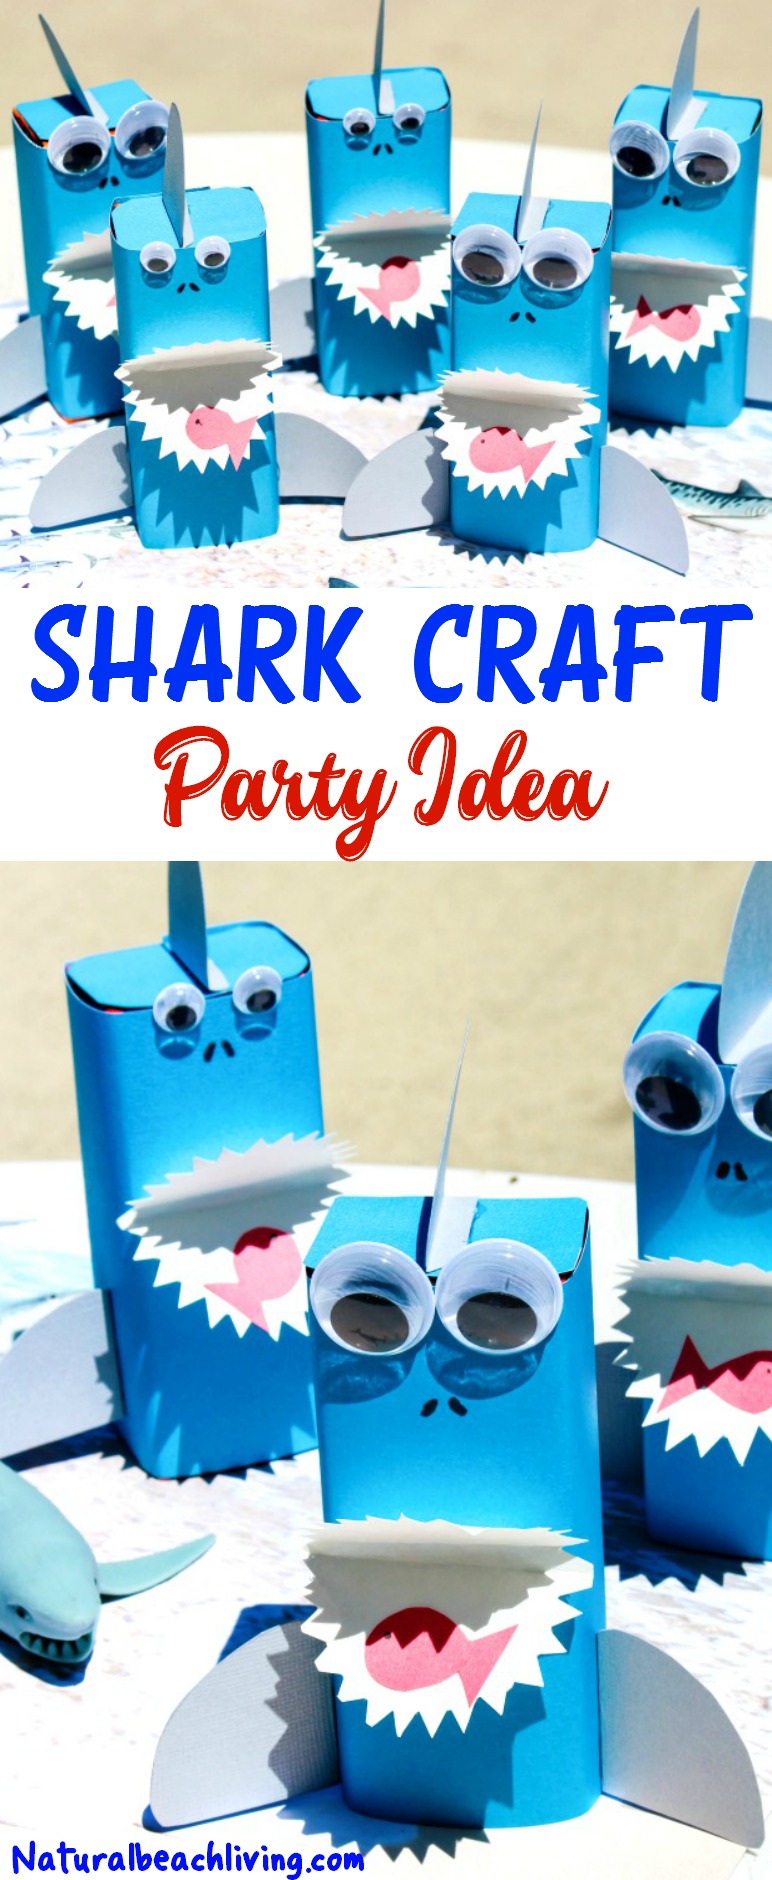 Shark Craft Perfect Under the Sea Party Idea, Shark Crafts for Kids, Shark Week Ideas for Kids, Ocean Theme Party Food Idea, Fun for a Kids Summer Idea